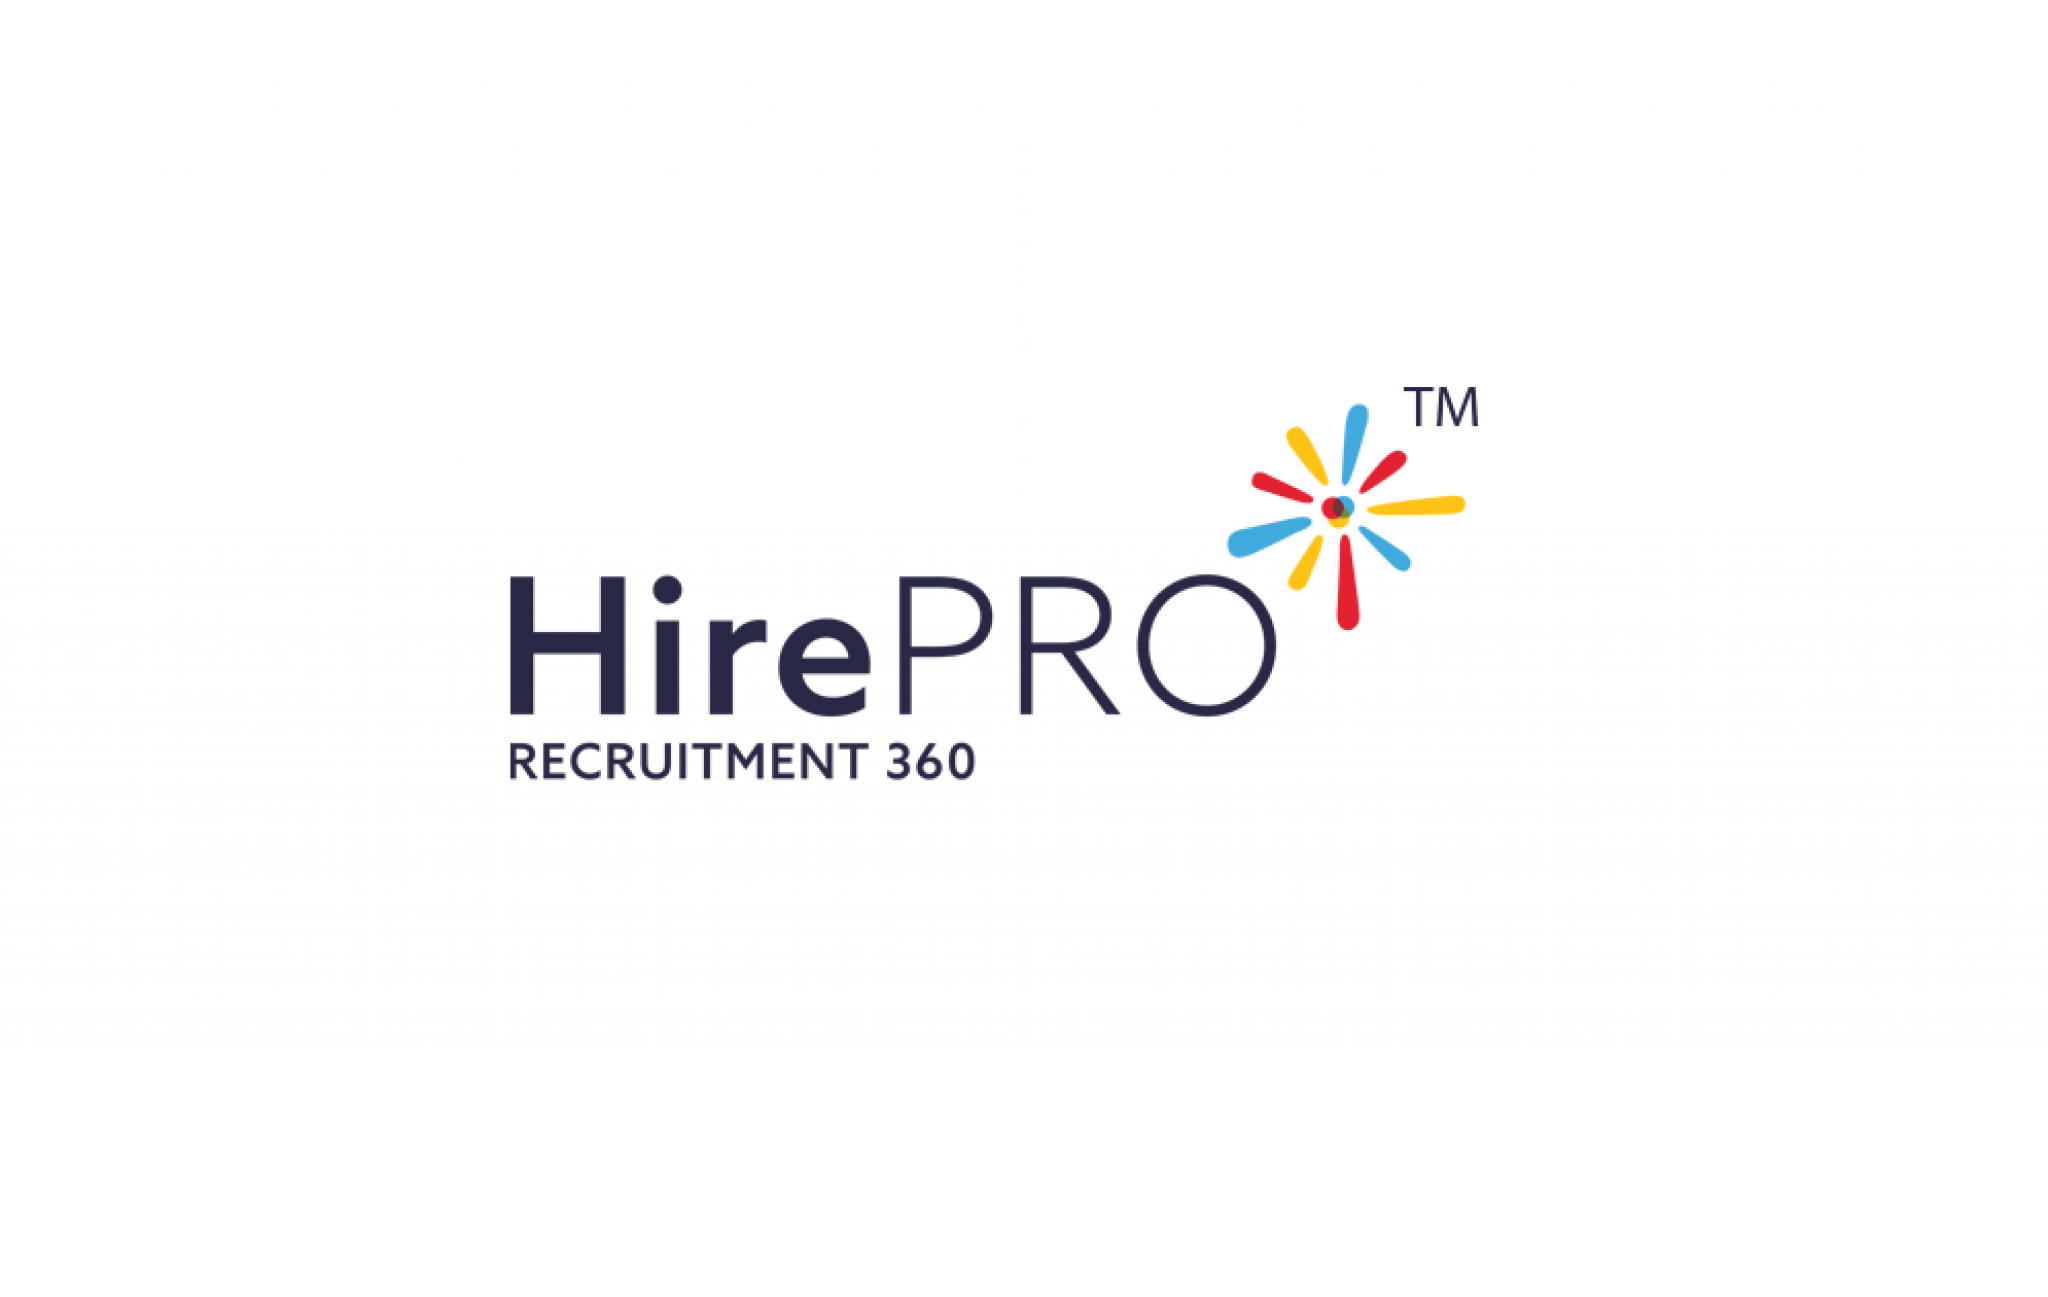 HirePro Complete Recruitment Solution - Ansefy Prepare